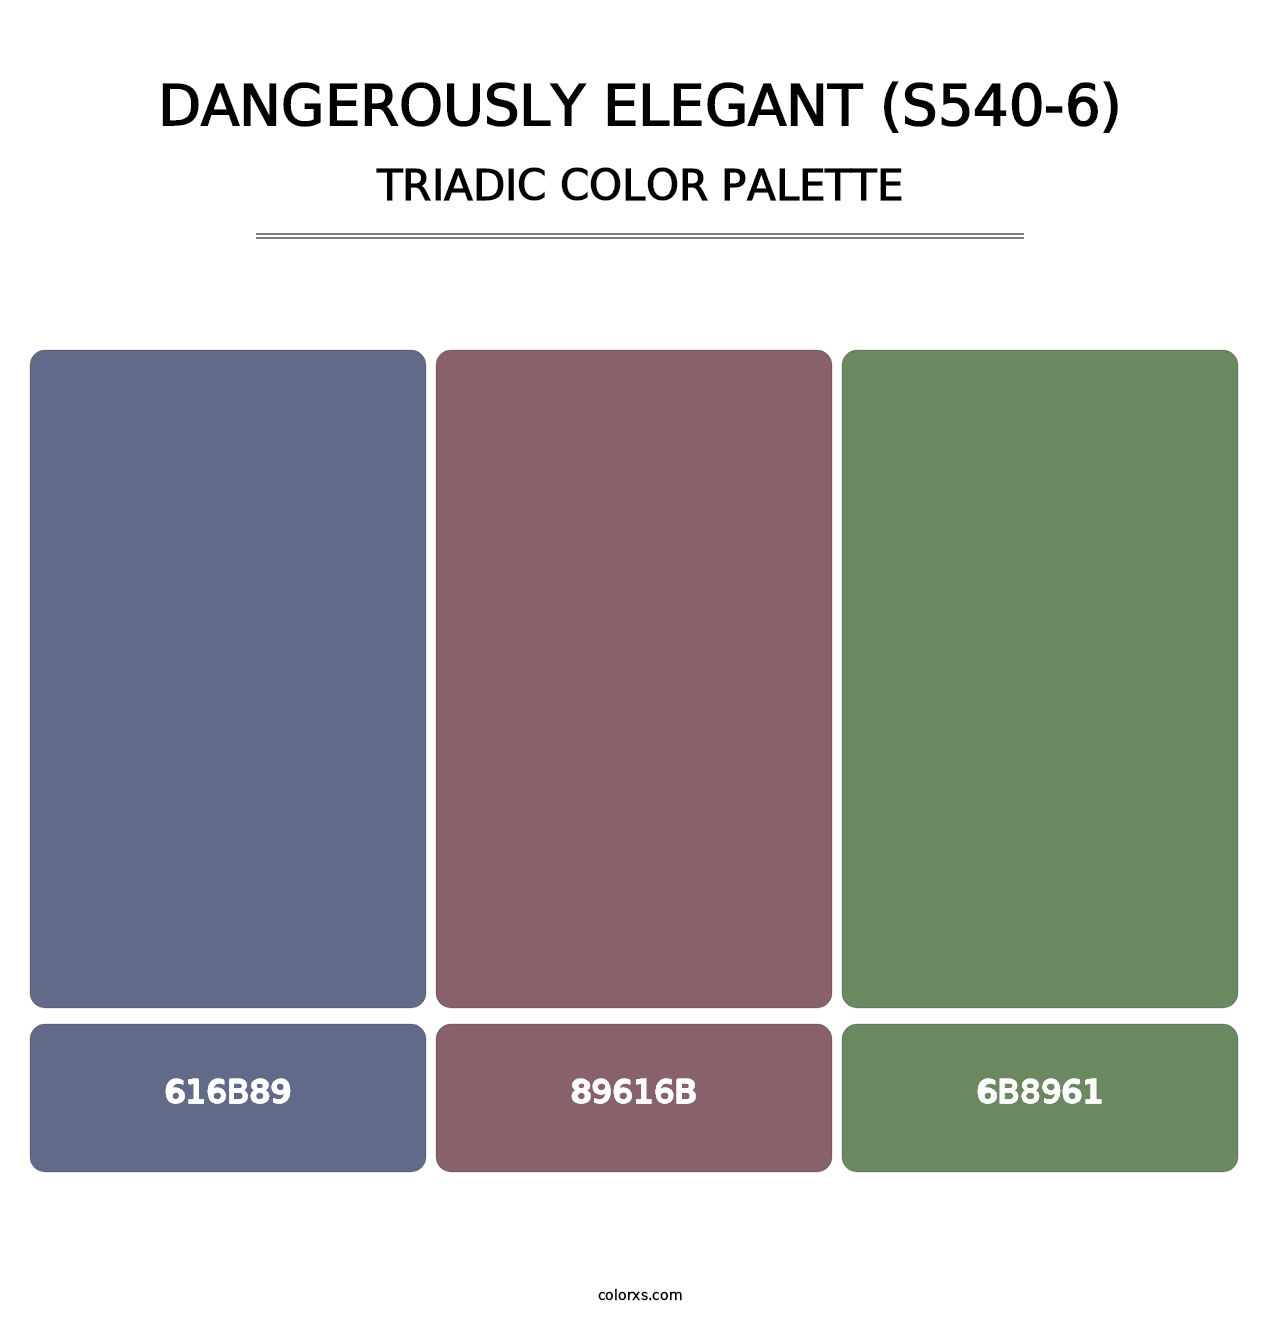 Dangerously Elegant (S540-6) - Triadic Color Palette